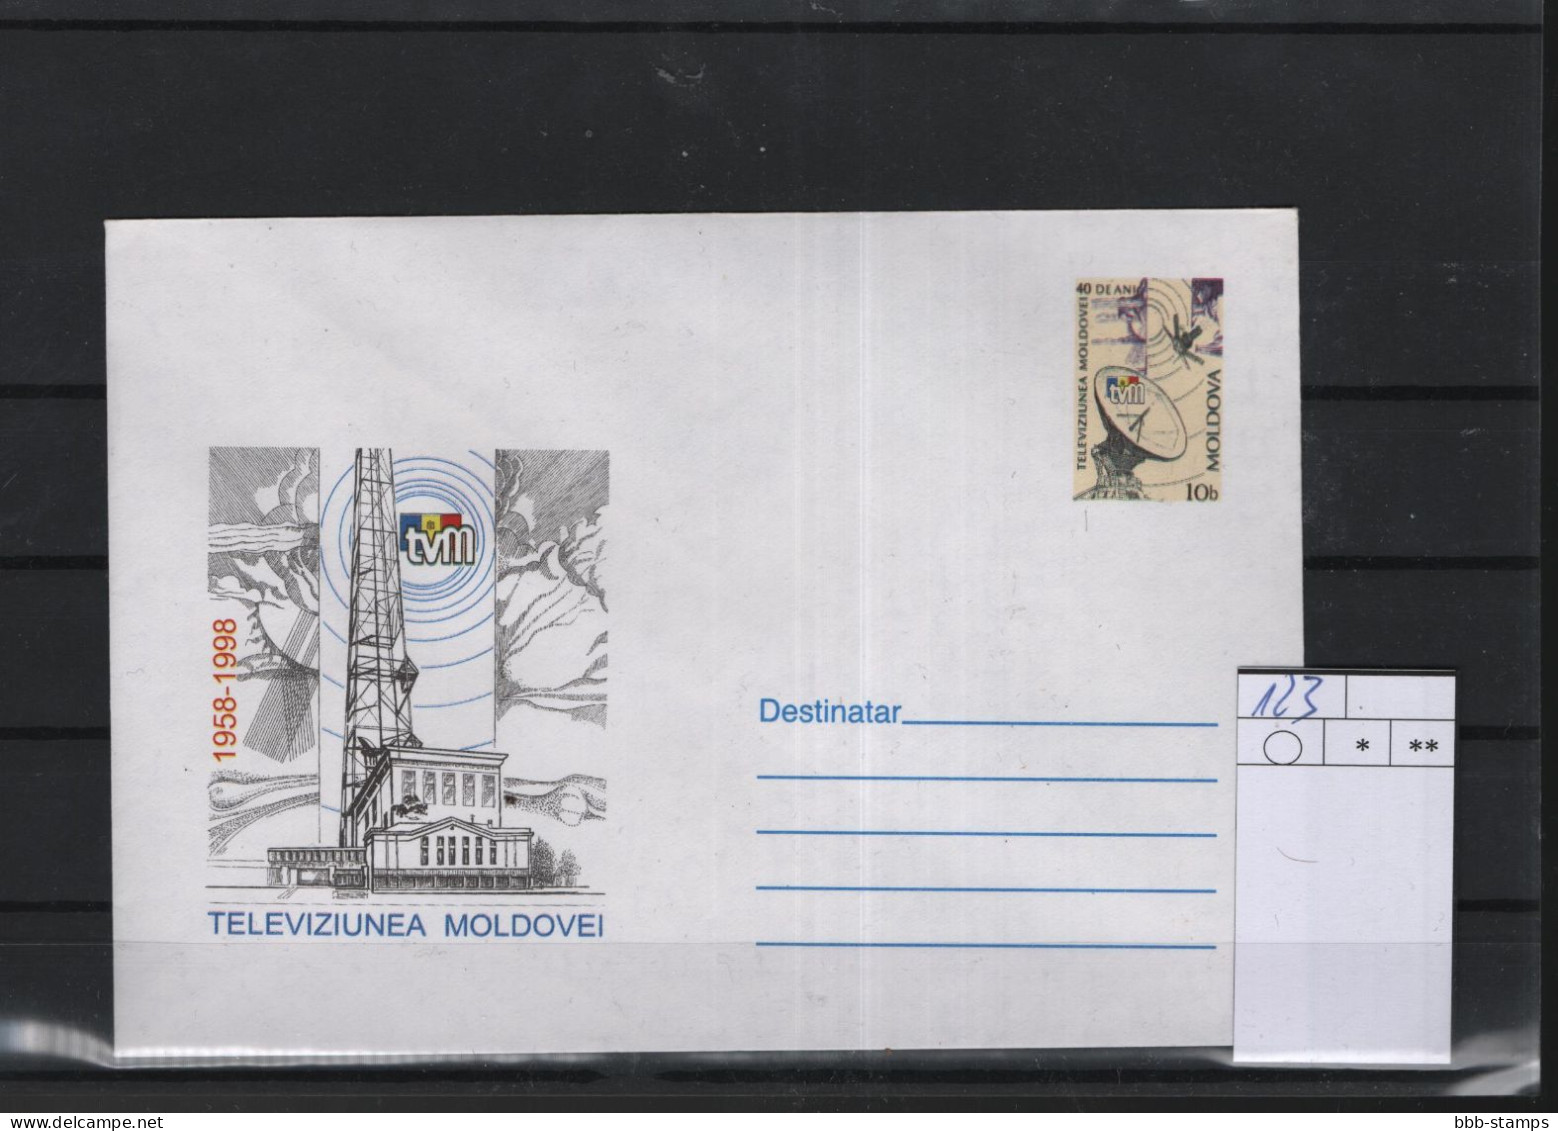 Moldavien Michel Cat.No. Postal Stat Envelop Issued 123 - Moldova